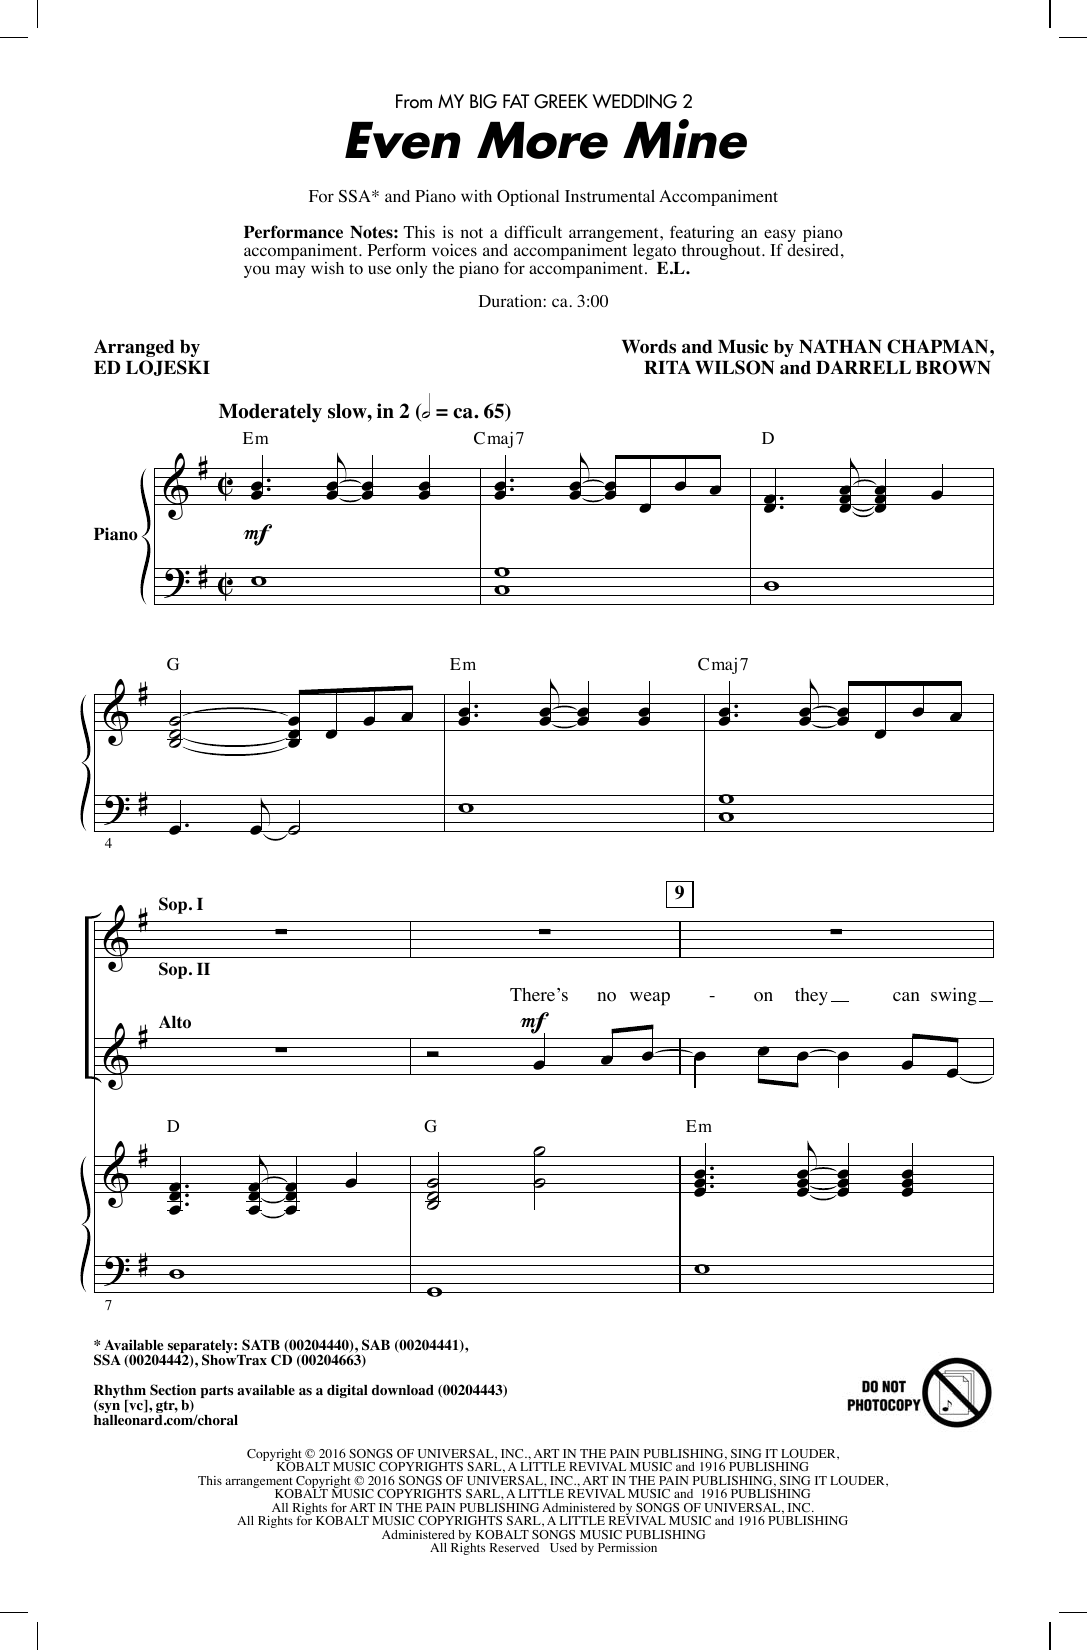 Rita Wilson Even More Mine (arr. Ed Lojeski) Sheet Music Notes & Chords for SSA - Download or Print PDF